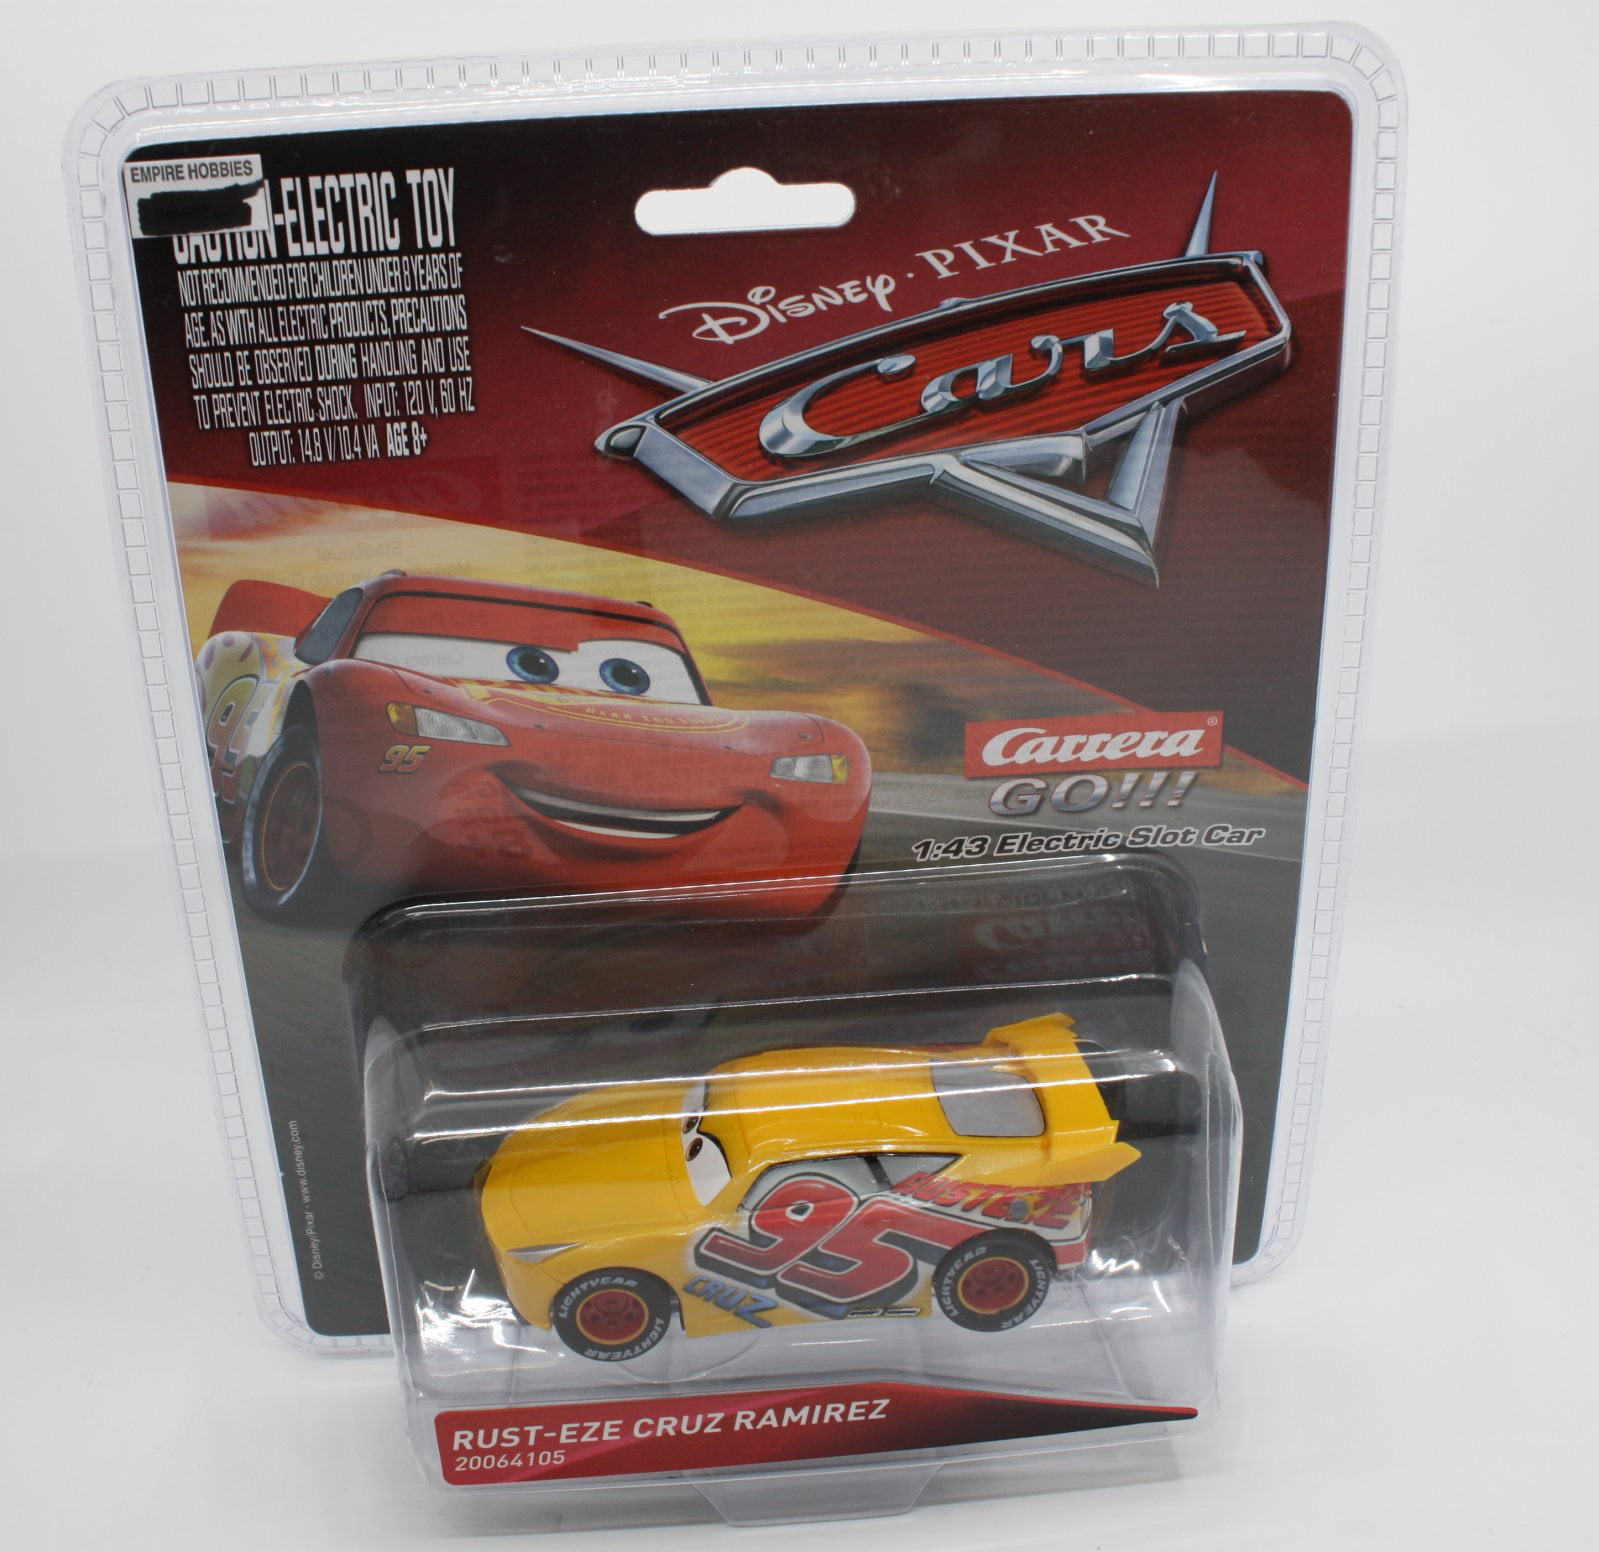 Go Disney Pixar Voitures Rust-Eze Cruz Ramirez Auto Neuf Et Ov Carrera 64105 